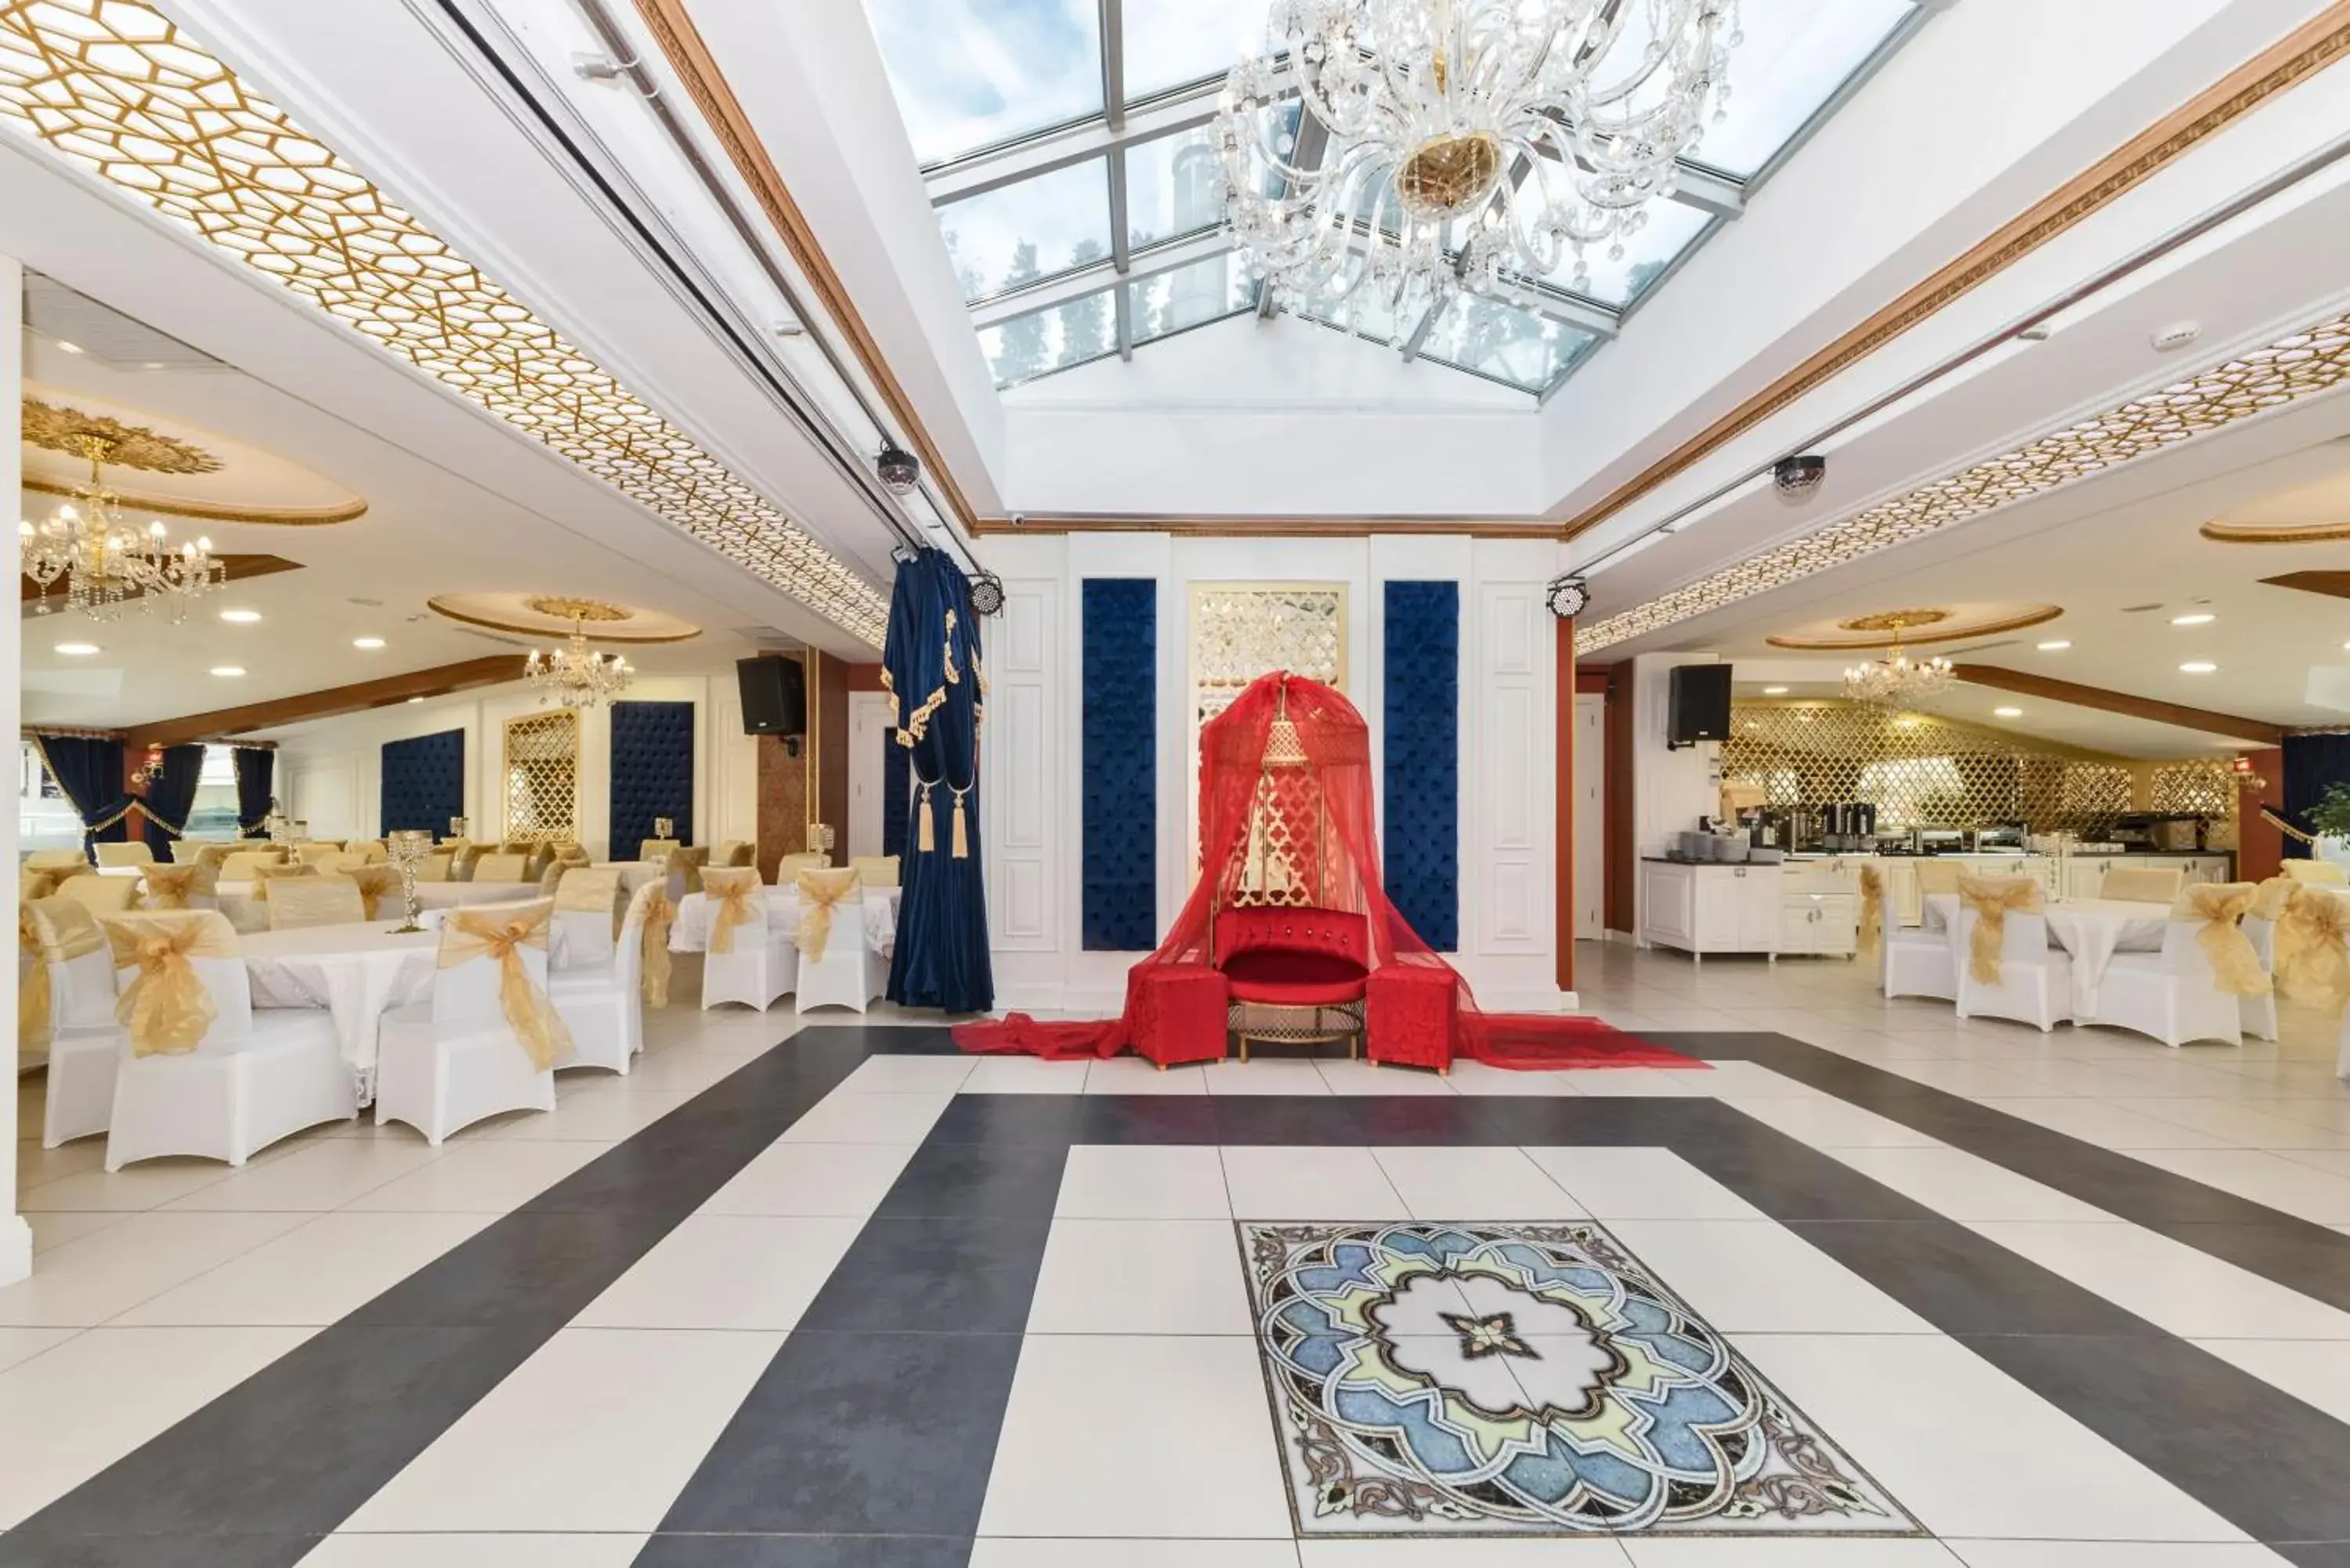 Banquet/Function facilities, Banquet Facilities in Marnas Hotels